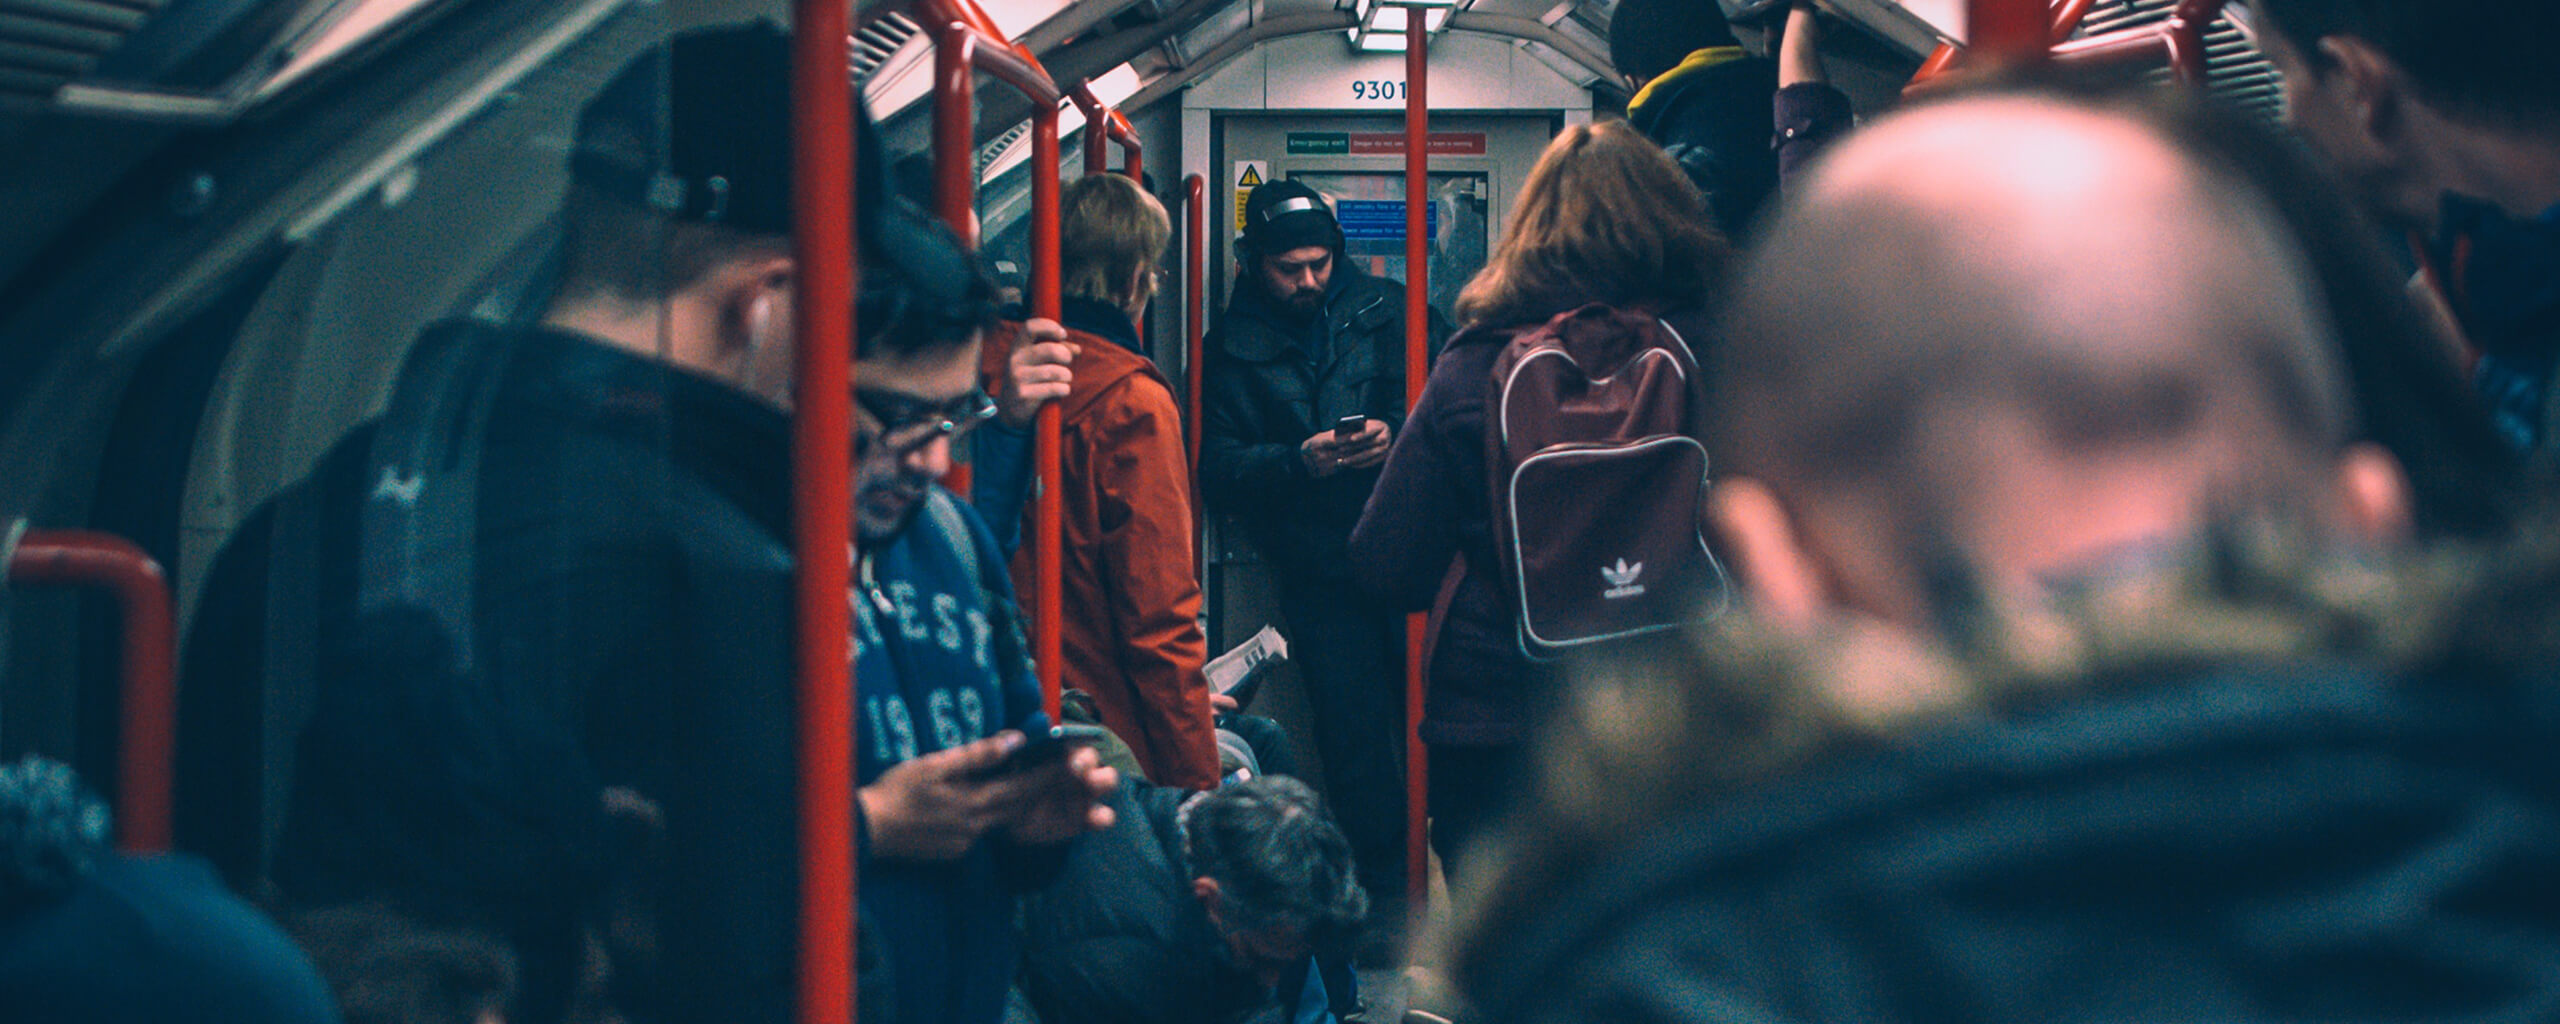 people on the tube